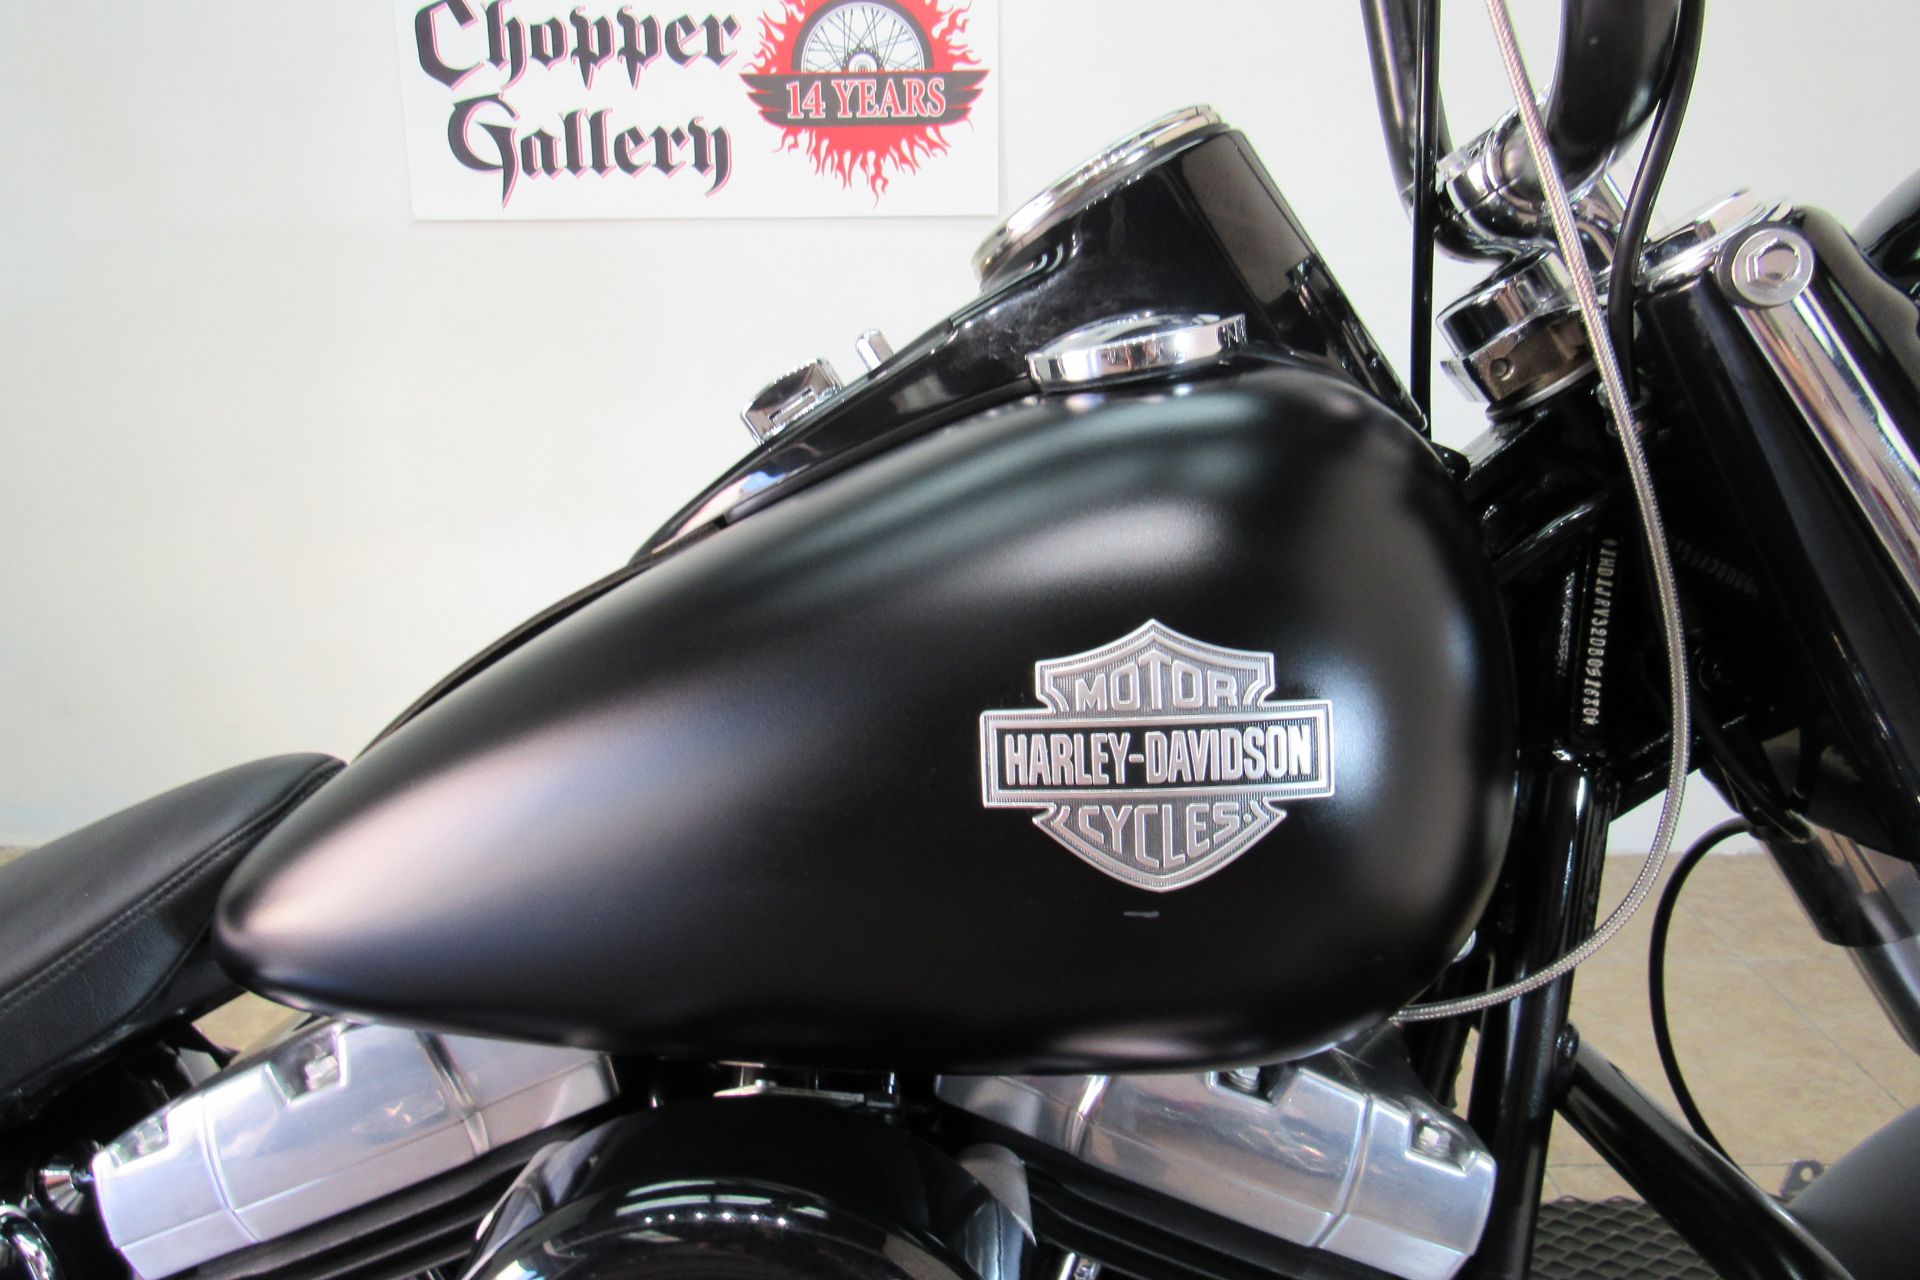 2013 Harley-Davidson Softail Slim® in Temecula, California - Photo 7